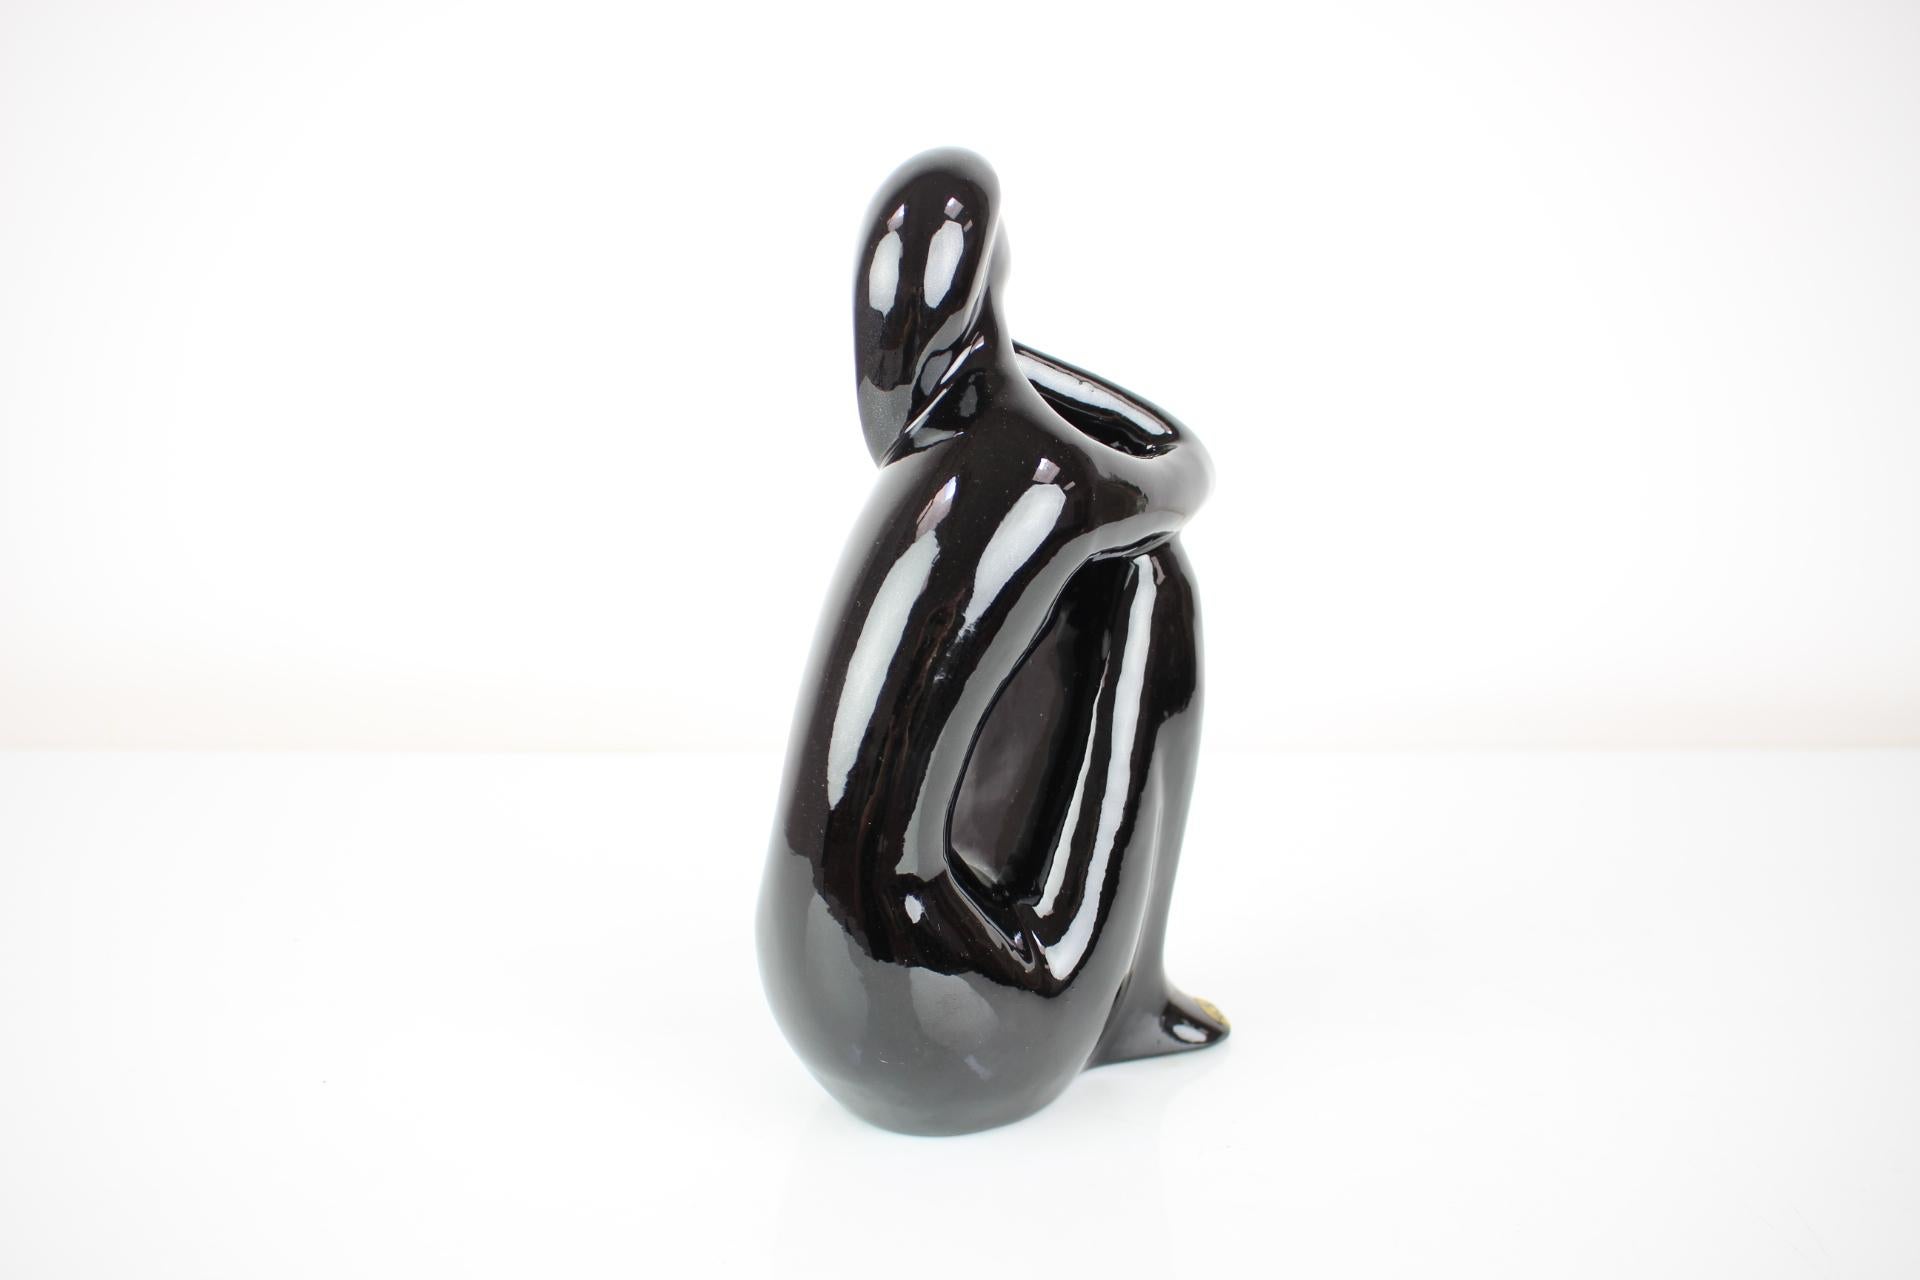 Mid-Century Modern Mid-Century Sculpture of Sitting Women Designed by Jitka Forejtová, 1970s